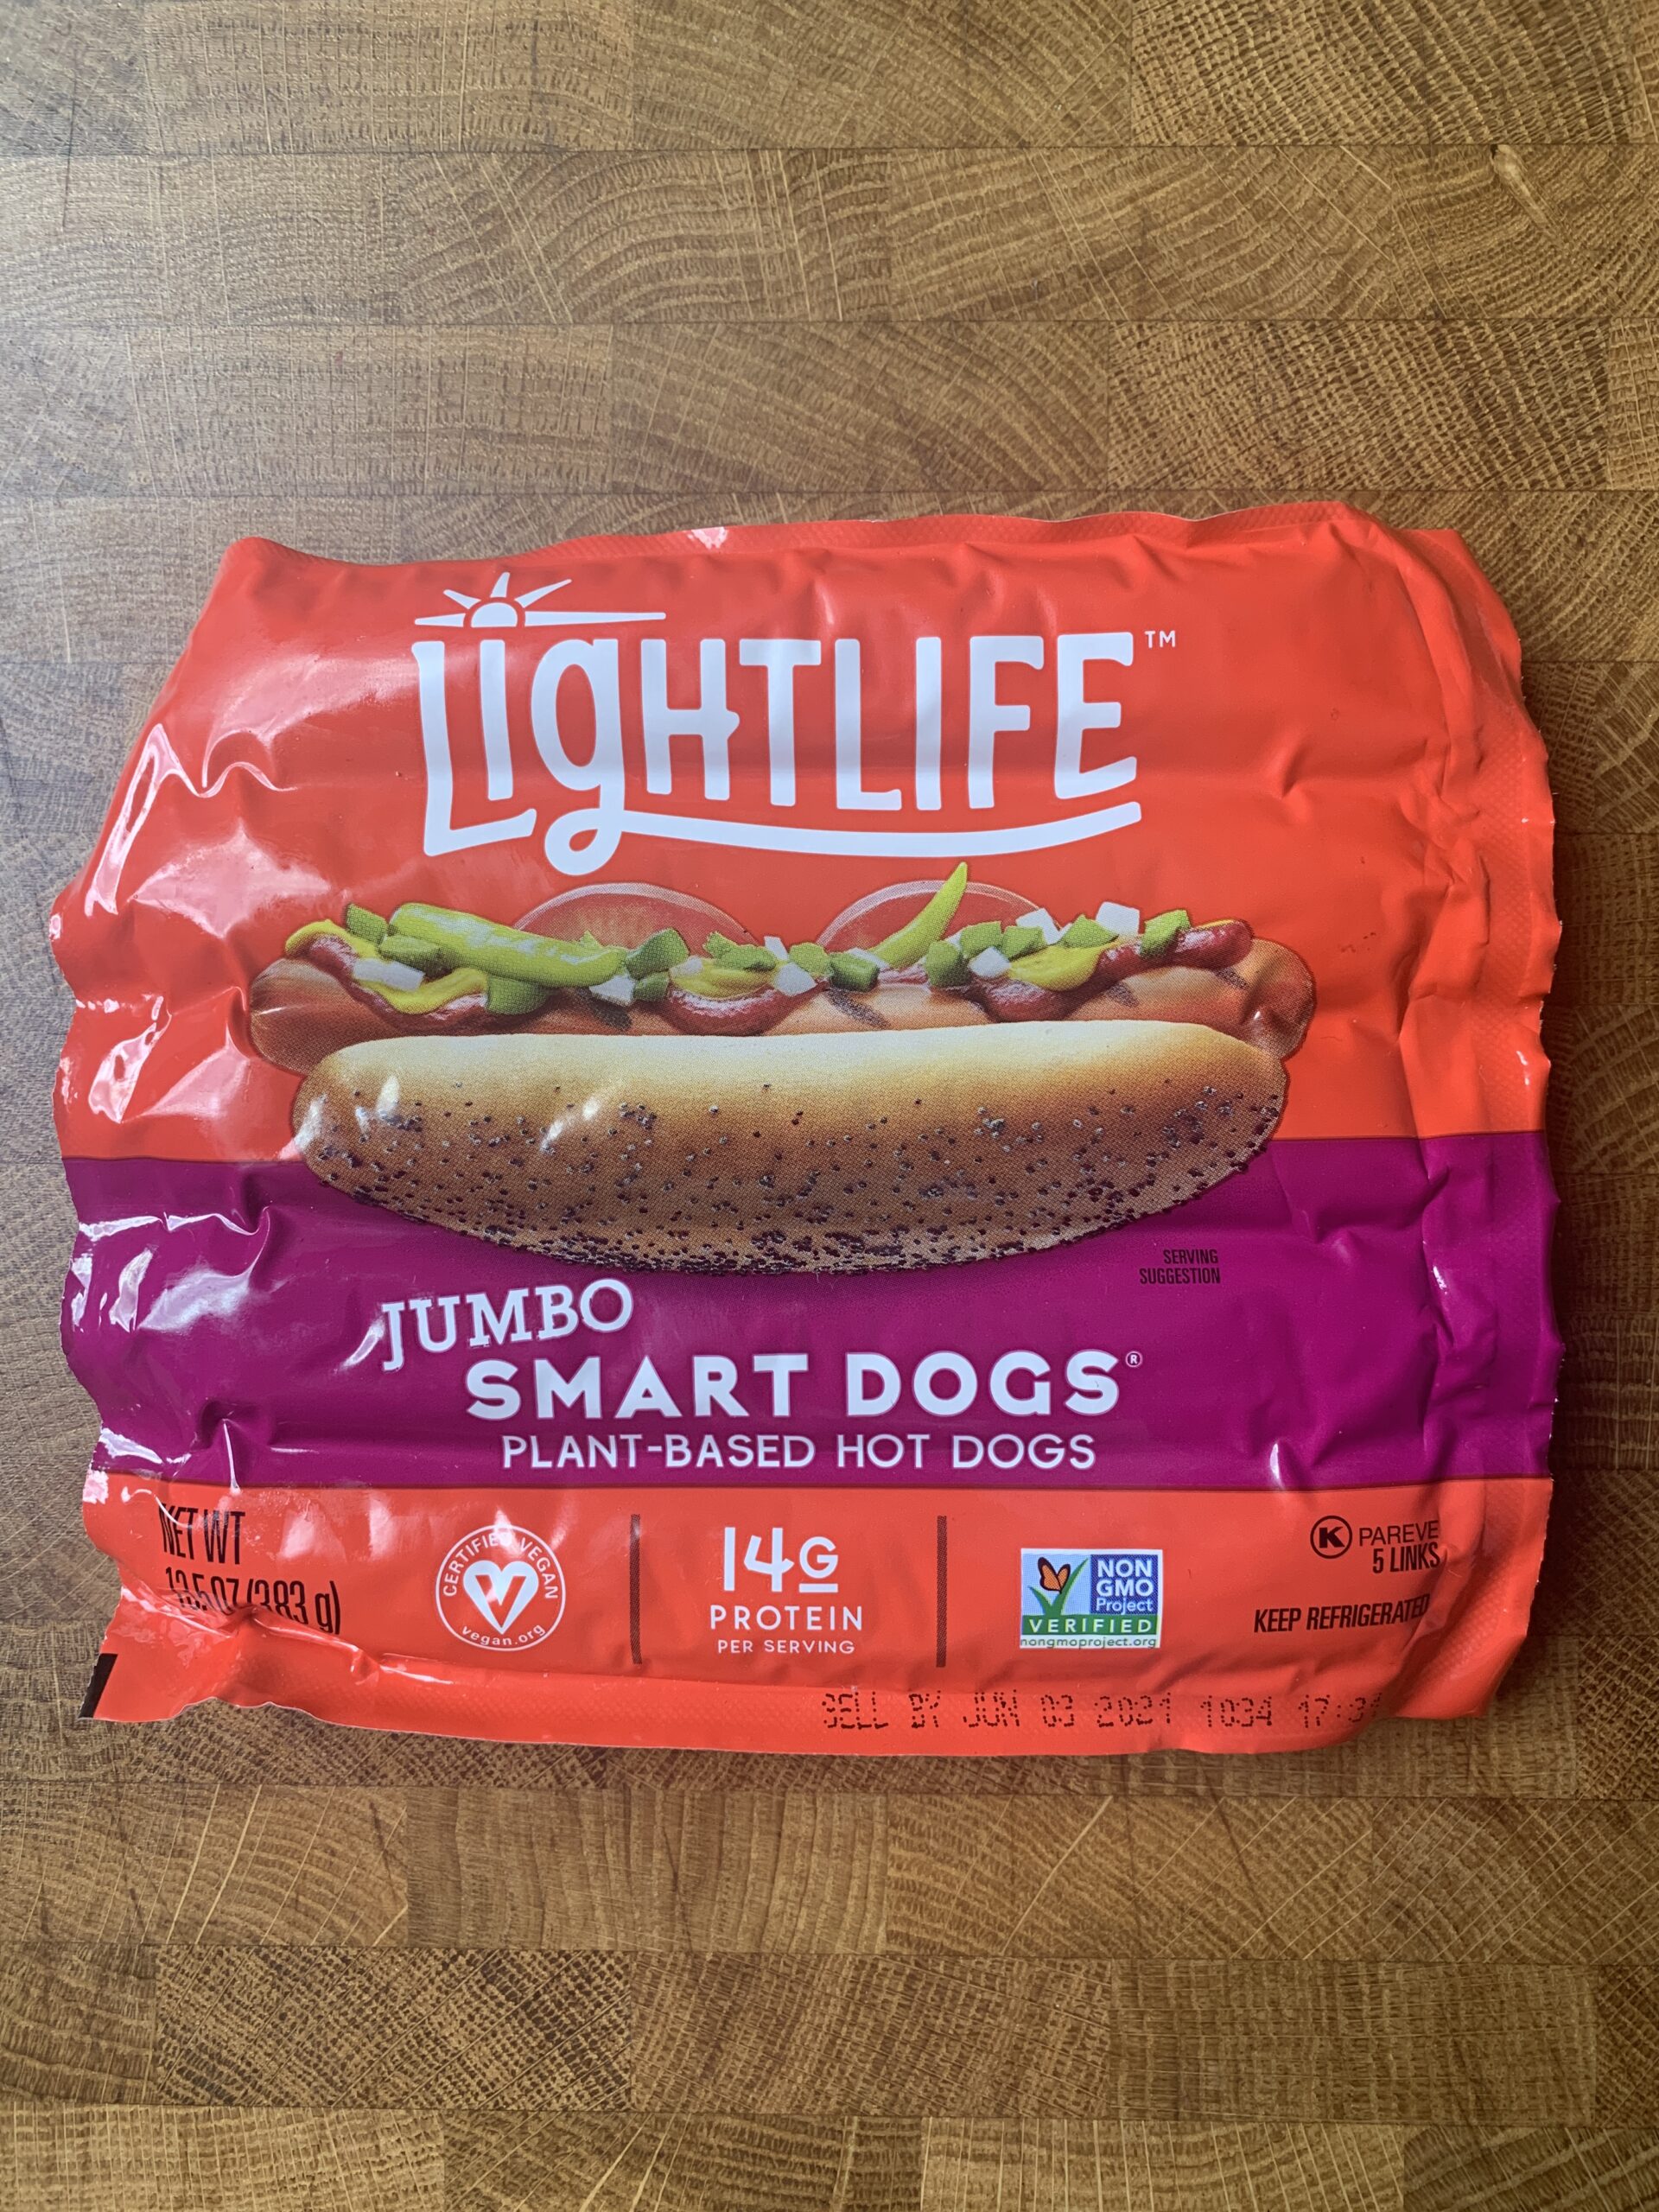 Lightlife plant-based jumbo smart dogs package.